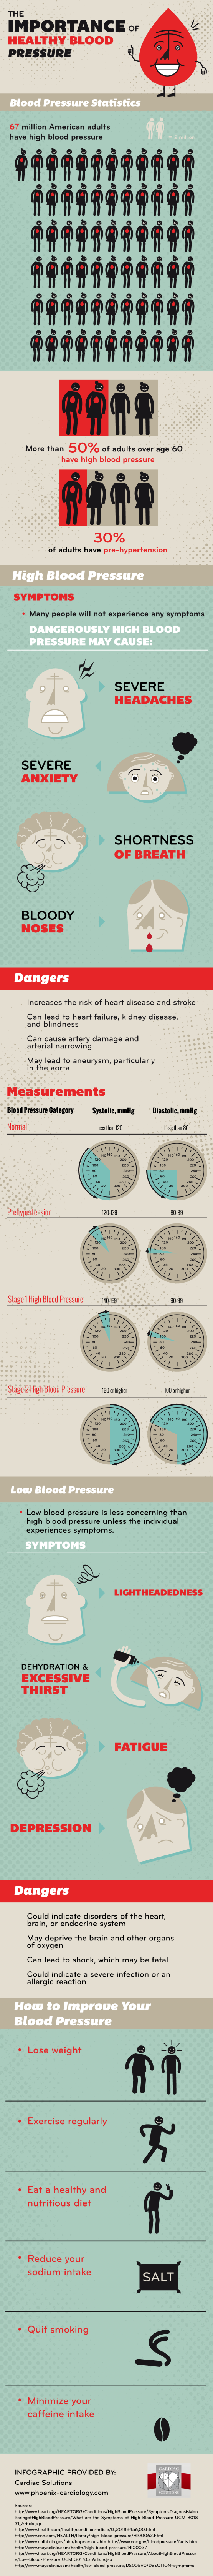 Health Effects of High Blood Pressure